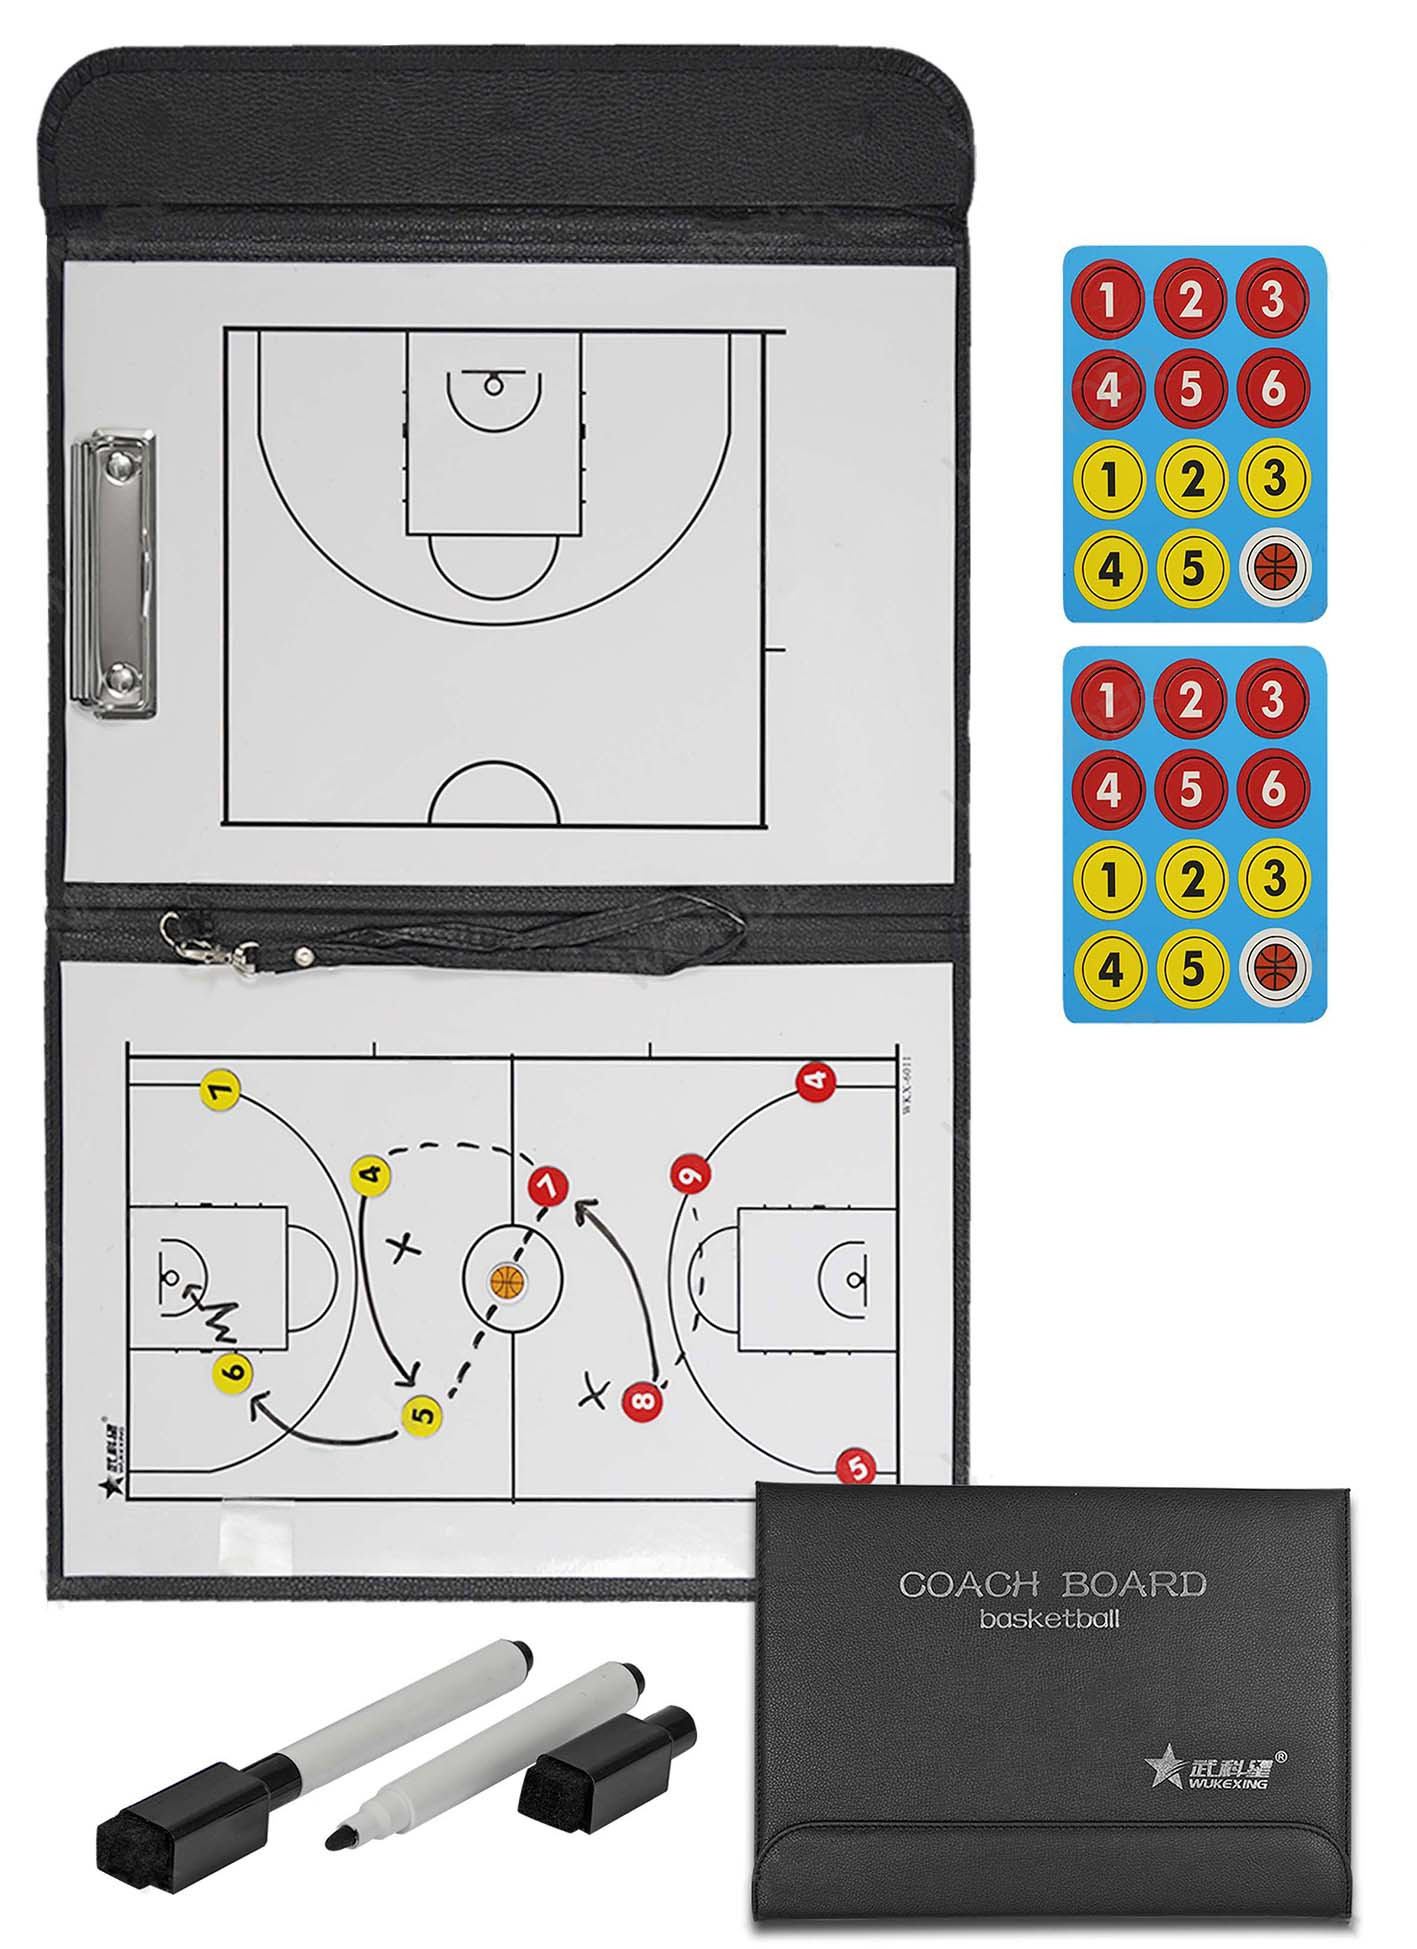 Imagen Tabla Táctica Estratégica Para Baloncesto Magnética 1